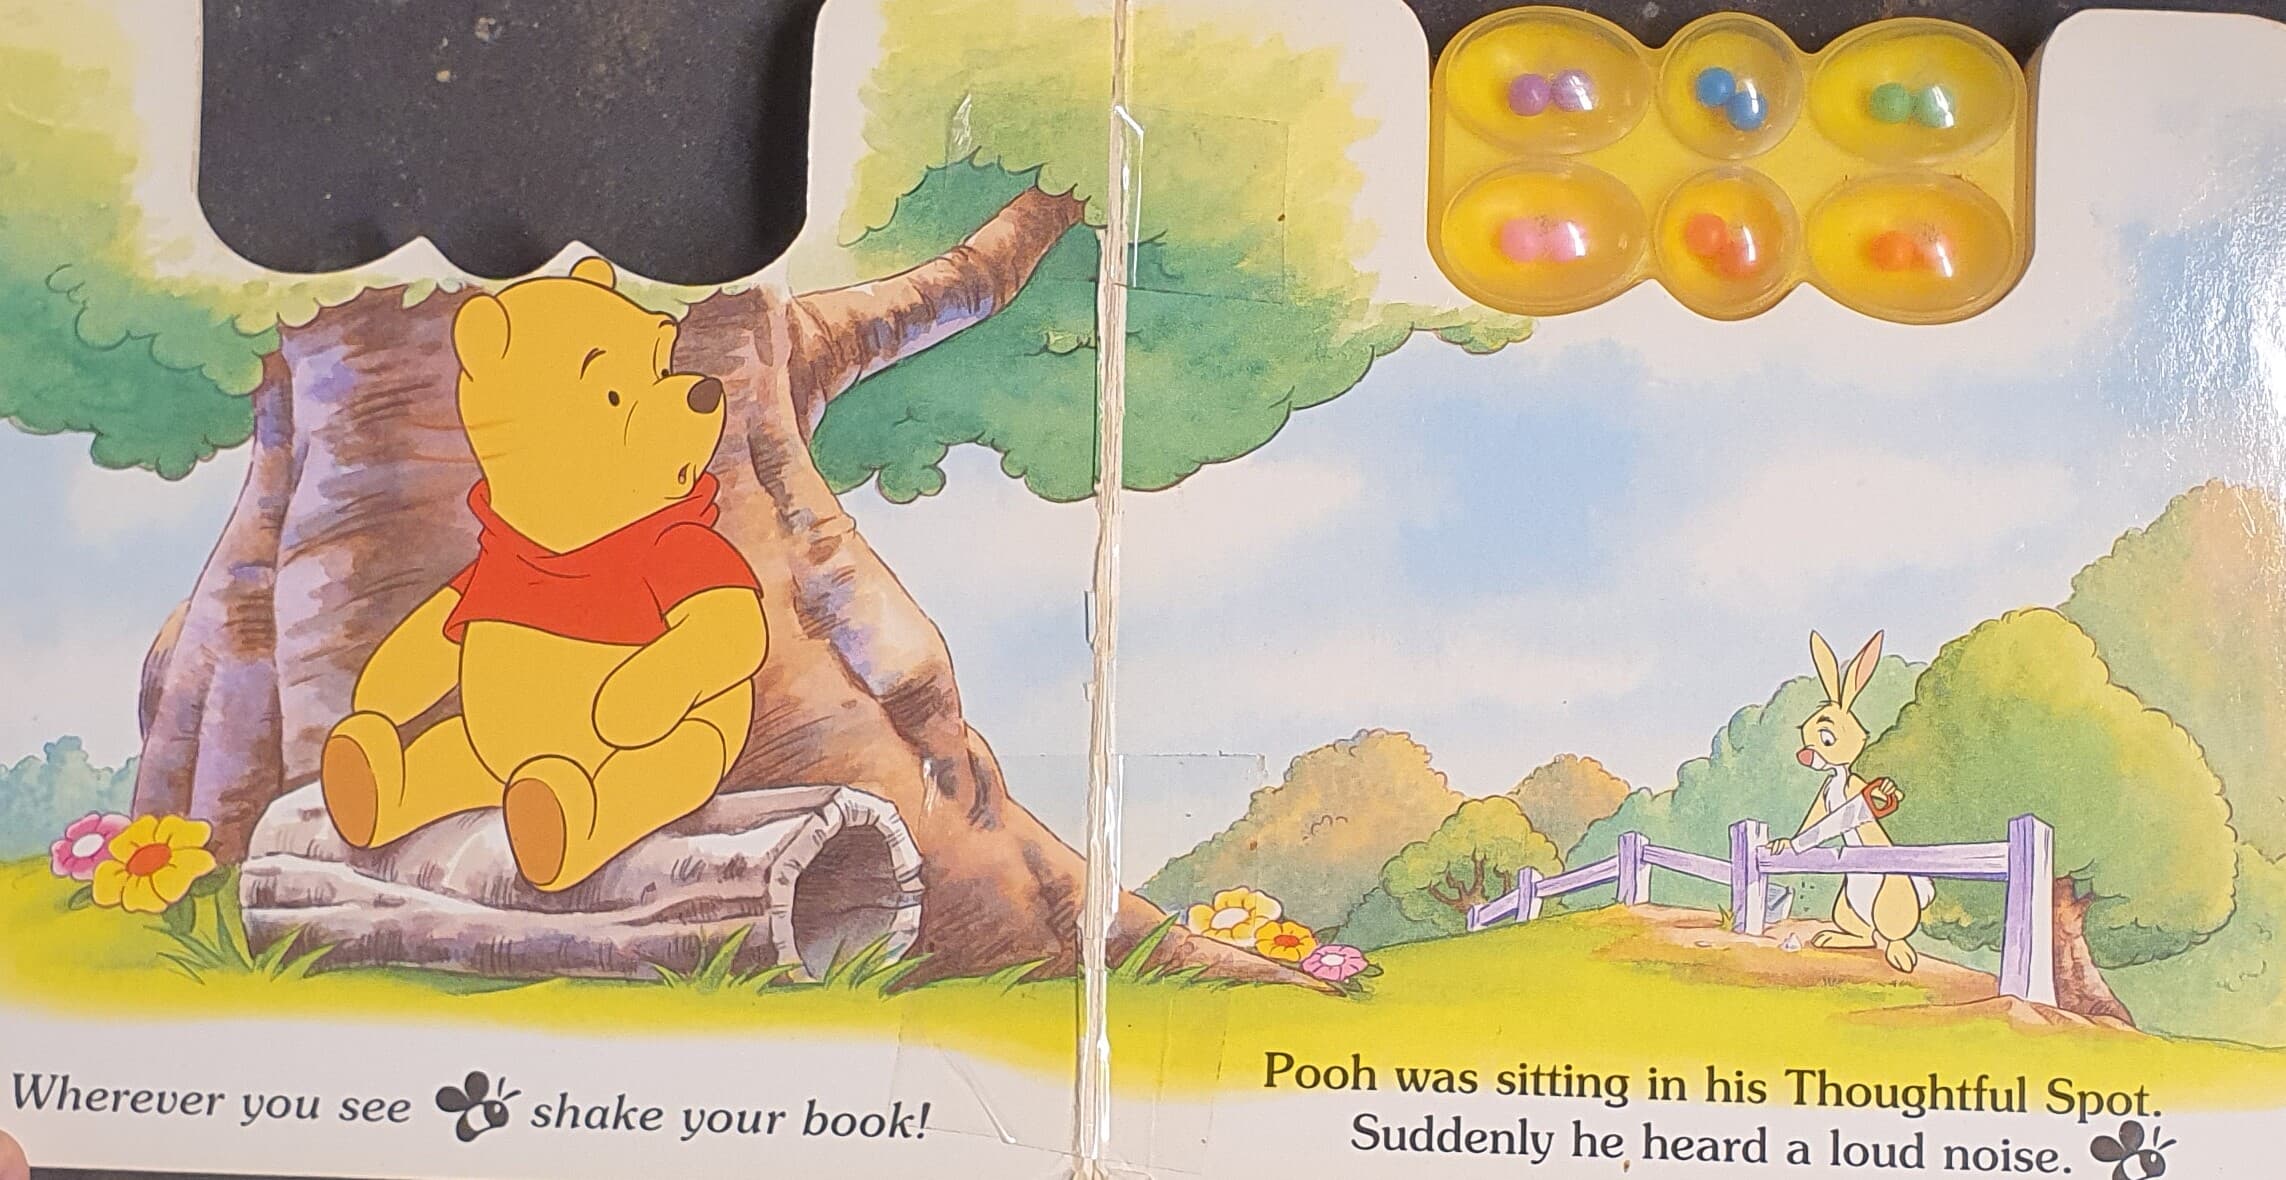 Disney's Pooh's Noisy Book (Busy Books, 6) Board book